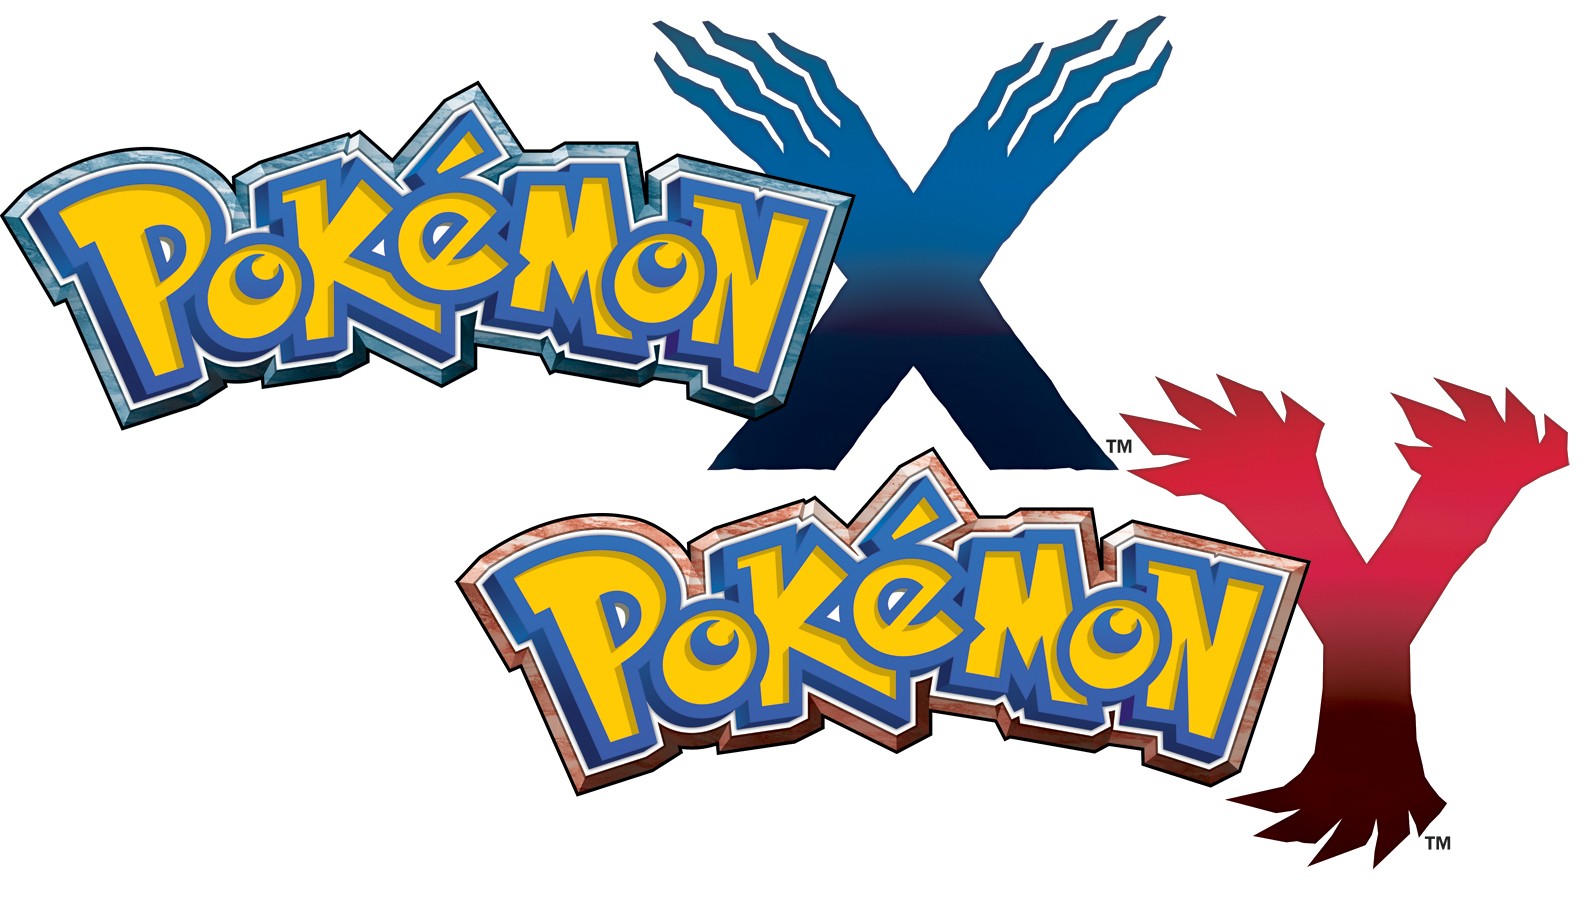 Pokemon X and Y Nintendo Direct tomorrow